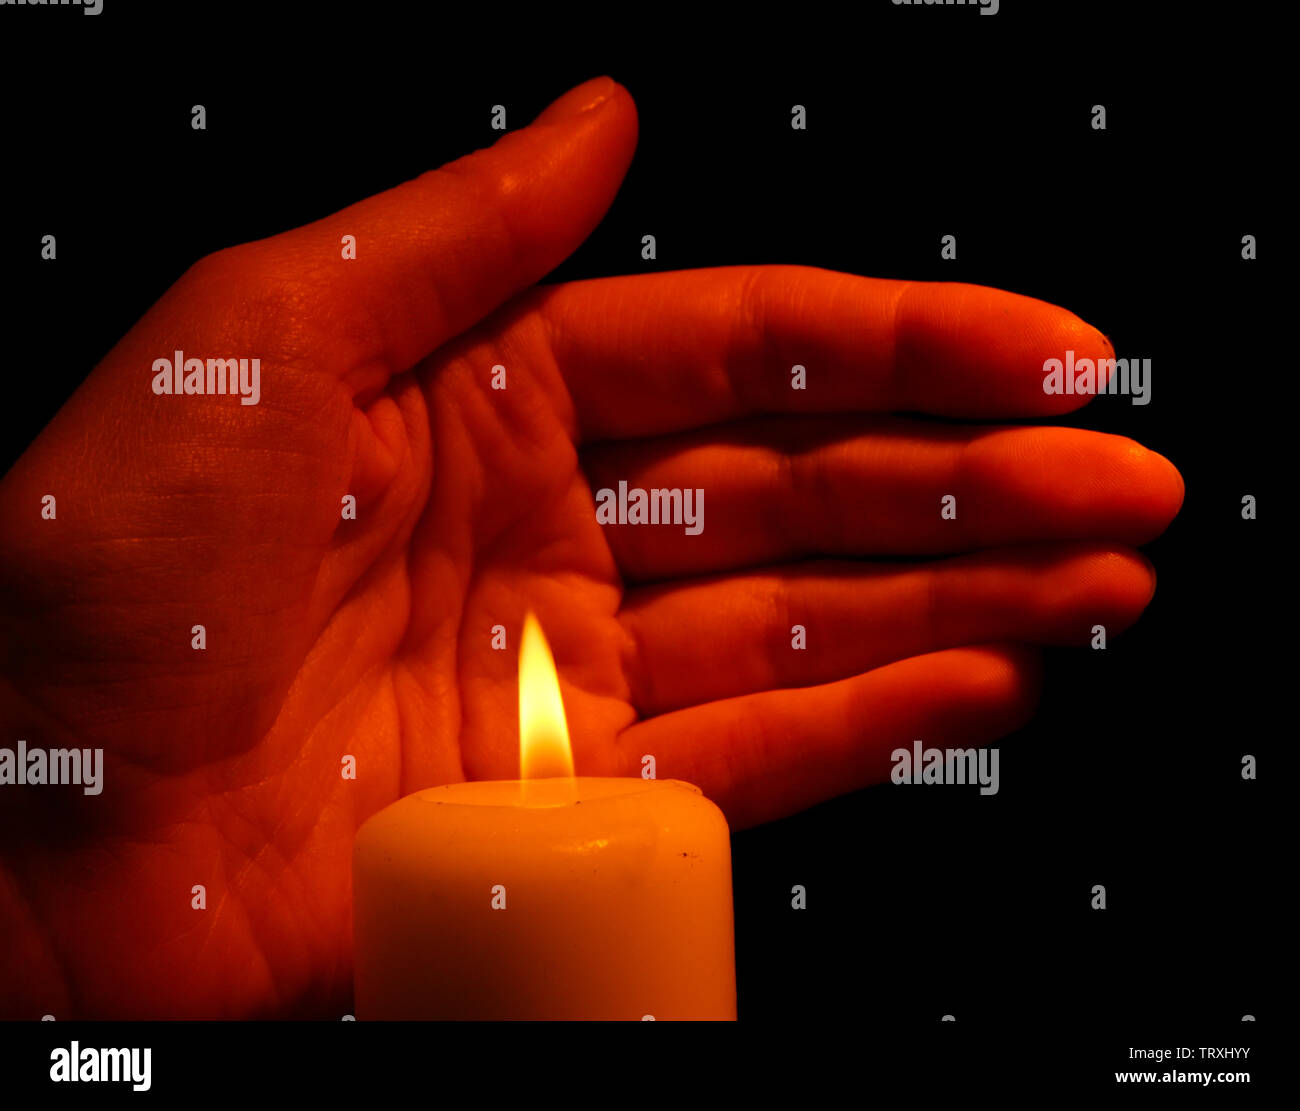 Burning candle and hand isolated on black Stock Photo